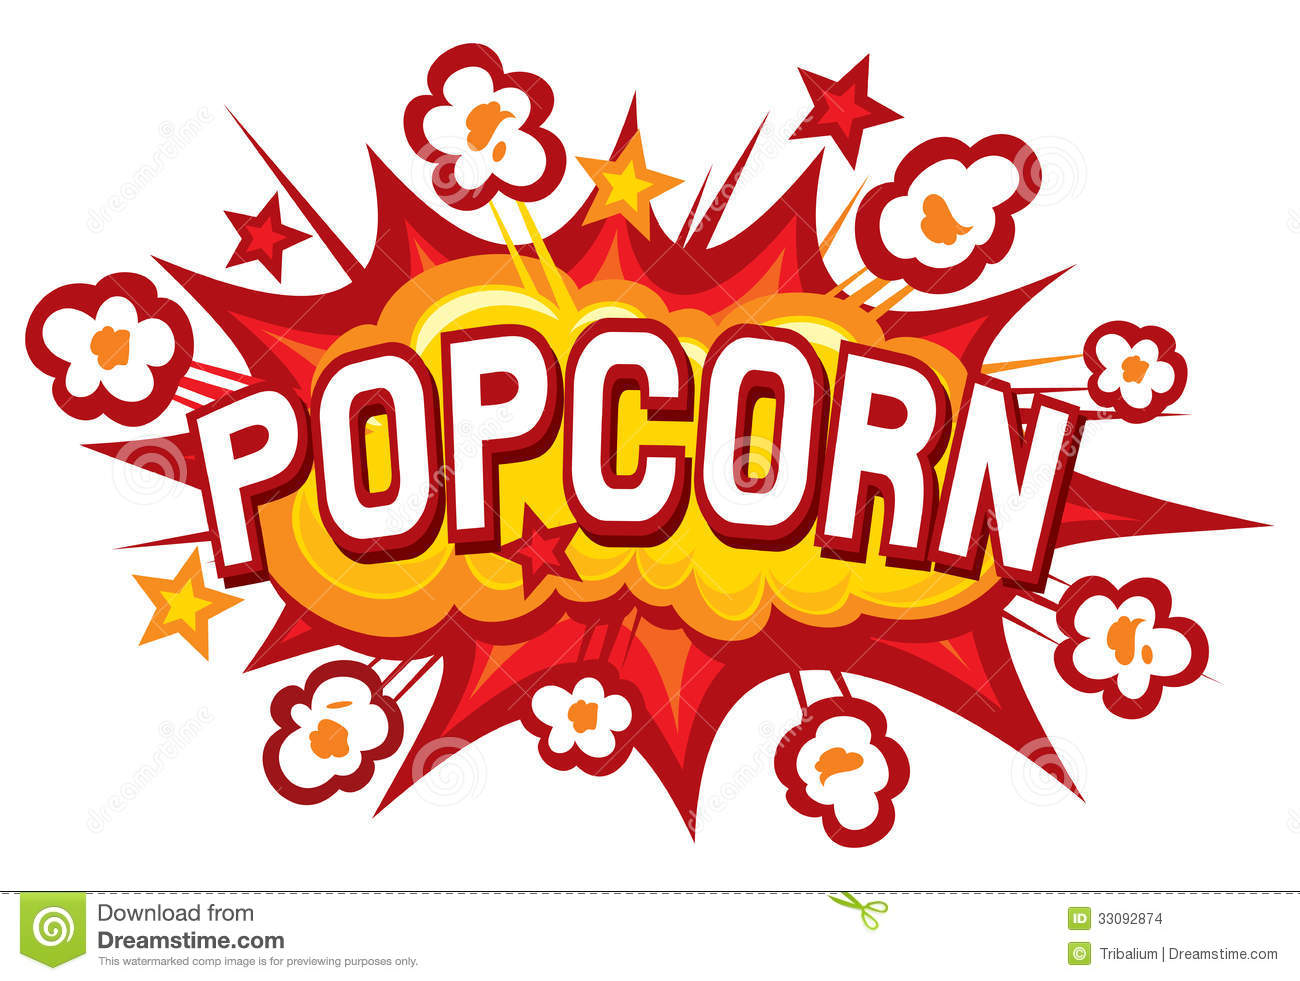 Popcorn #4